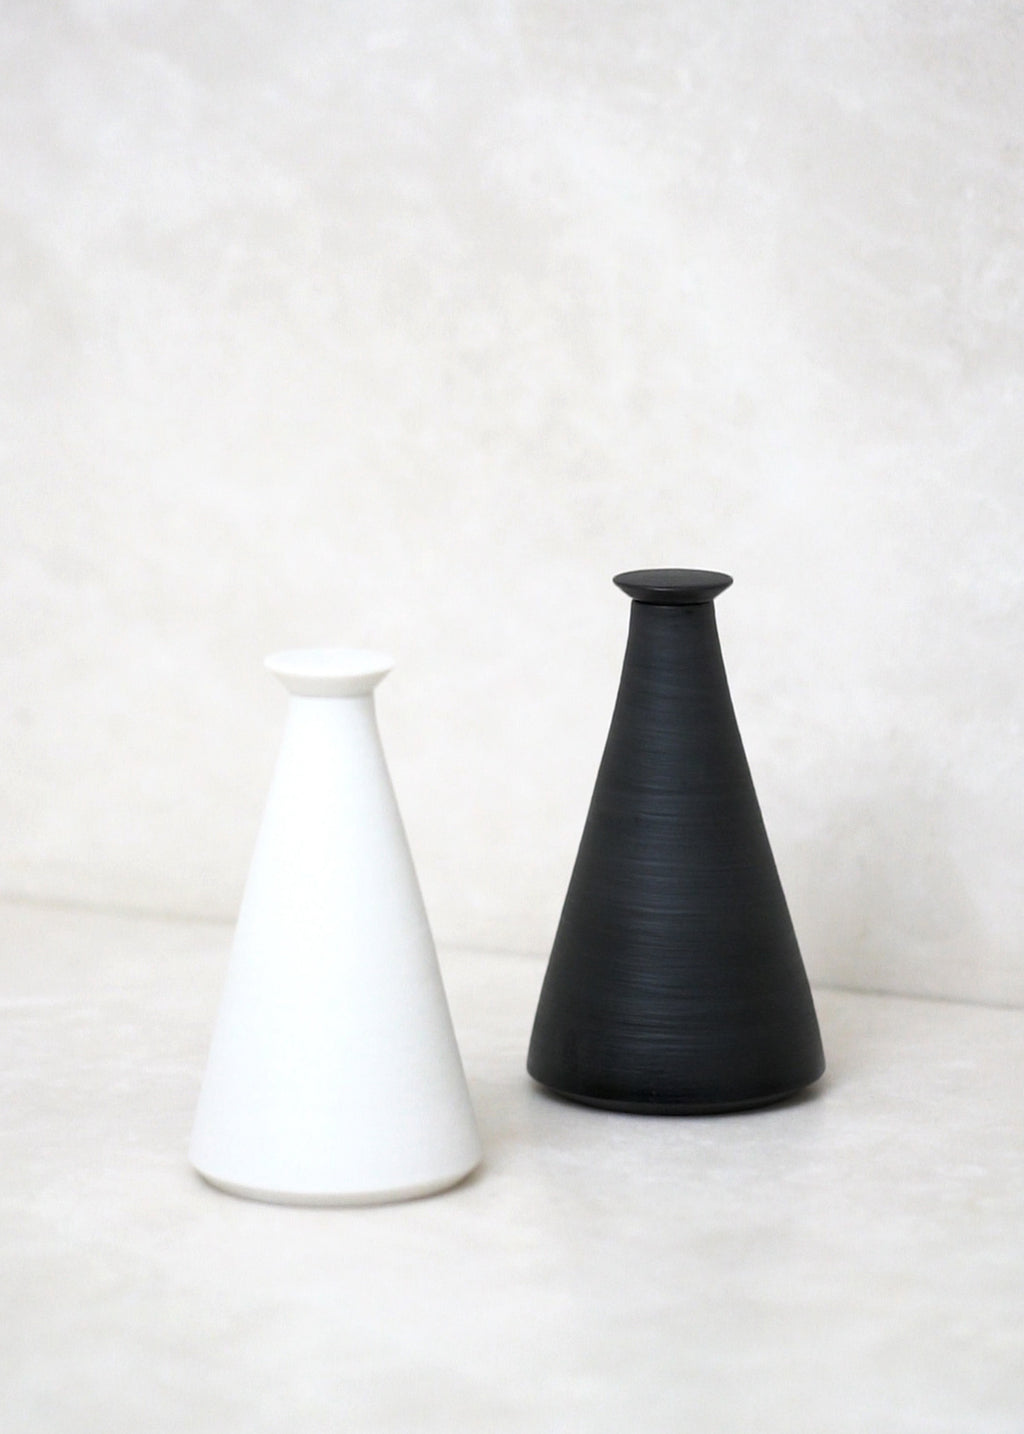 SHHH Exclusive Limited Edition Ceramic Bottles by Katuhisa Kitano